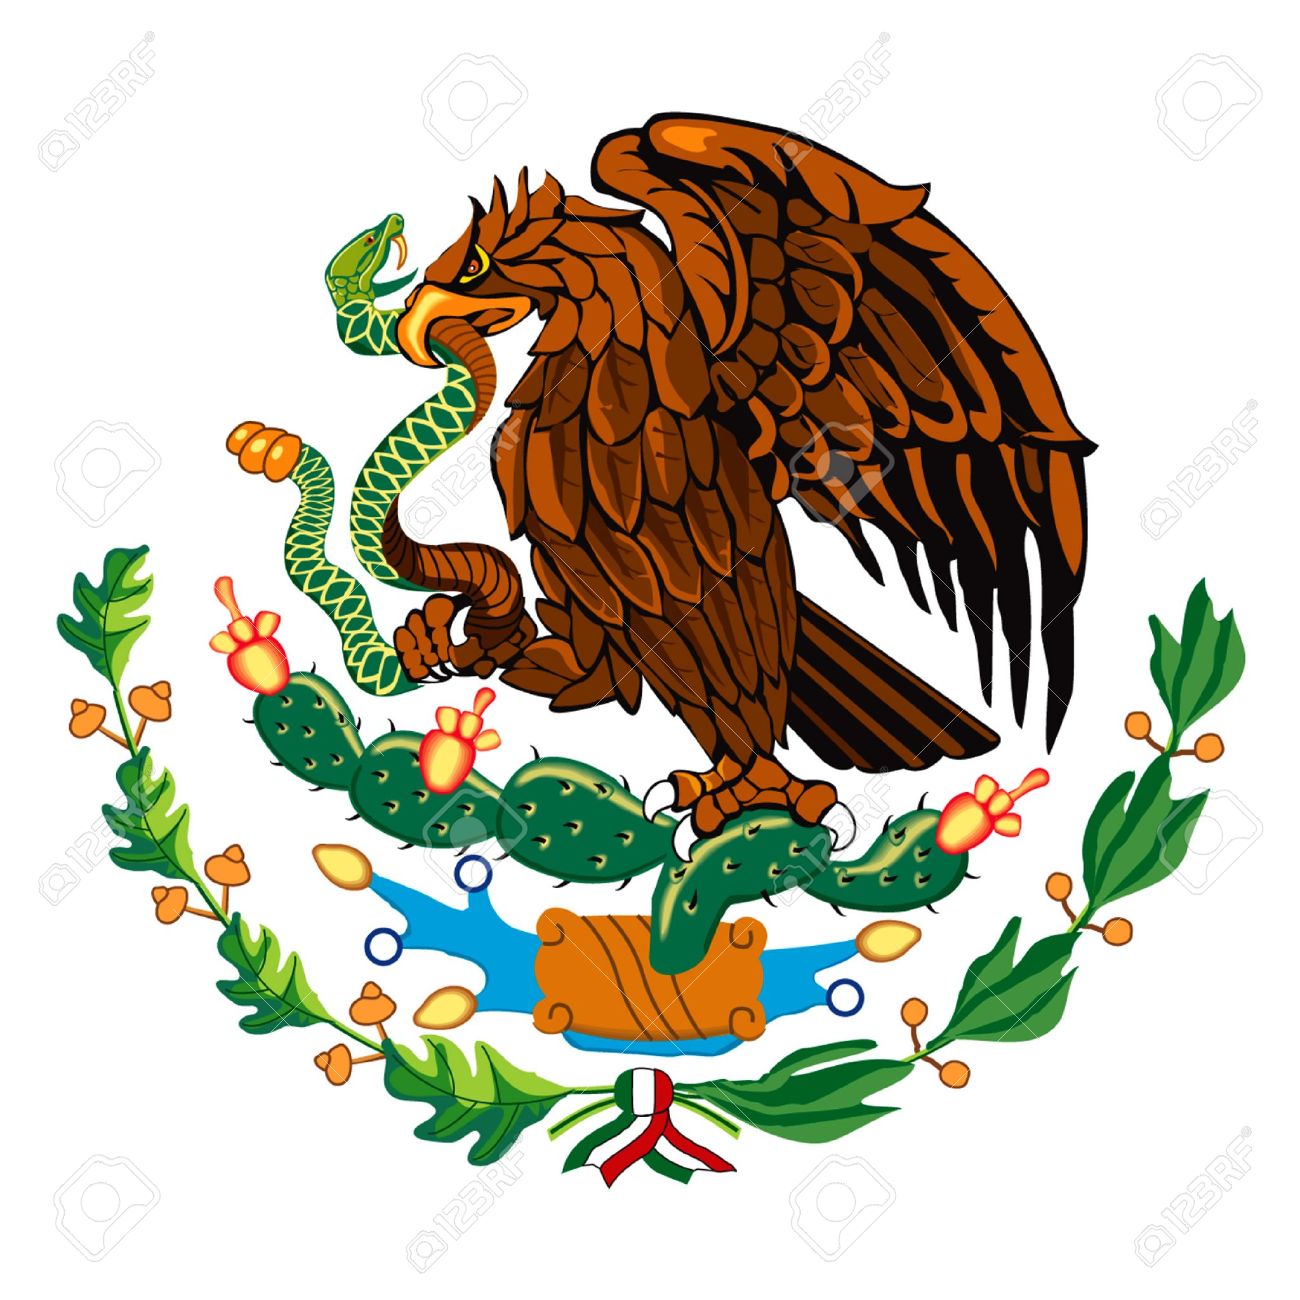 3306077-Mexican-flag-symbol-Stock-Vector-mexico-flag-eagle.jpg